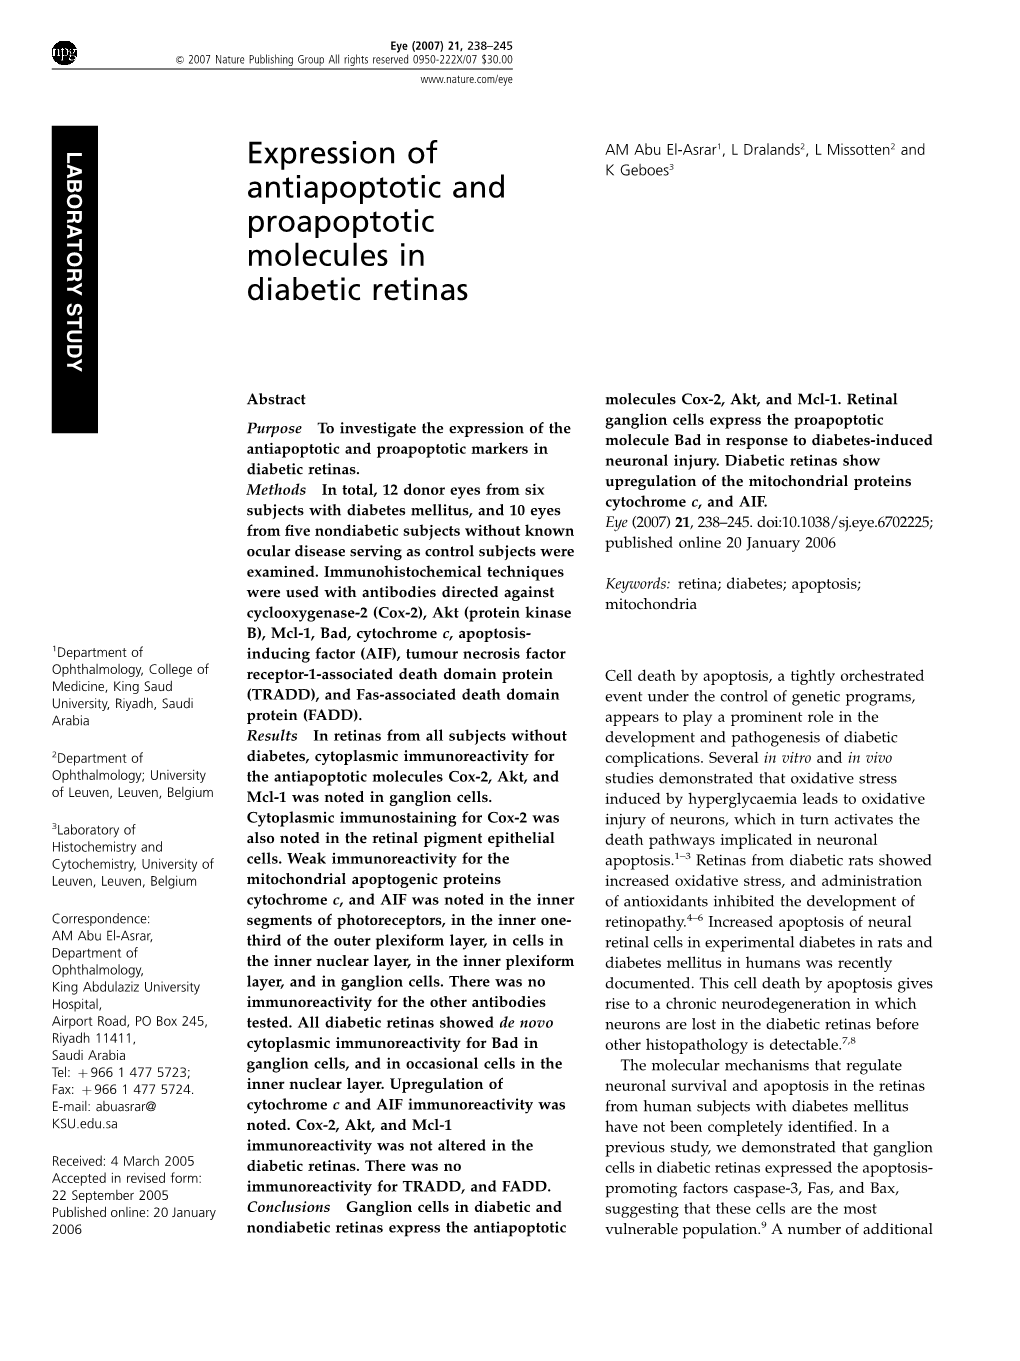 Expression of Antiapoptotic and Proapoptotic Molecules in Diabetic